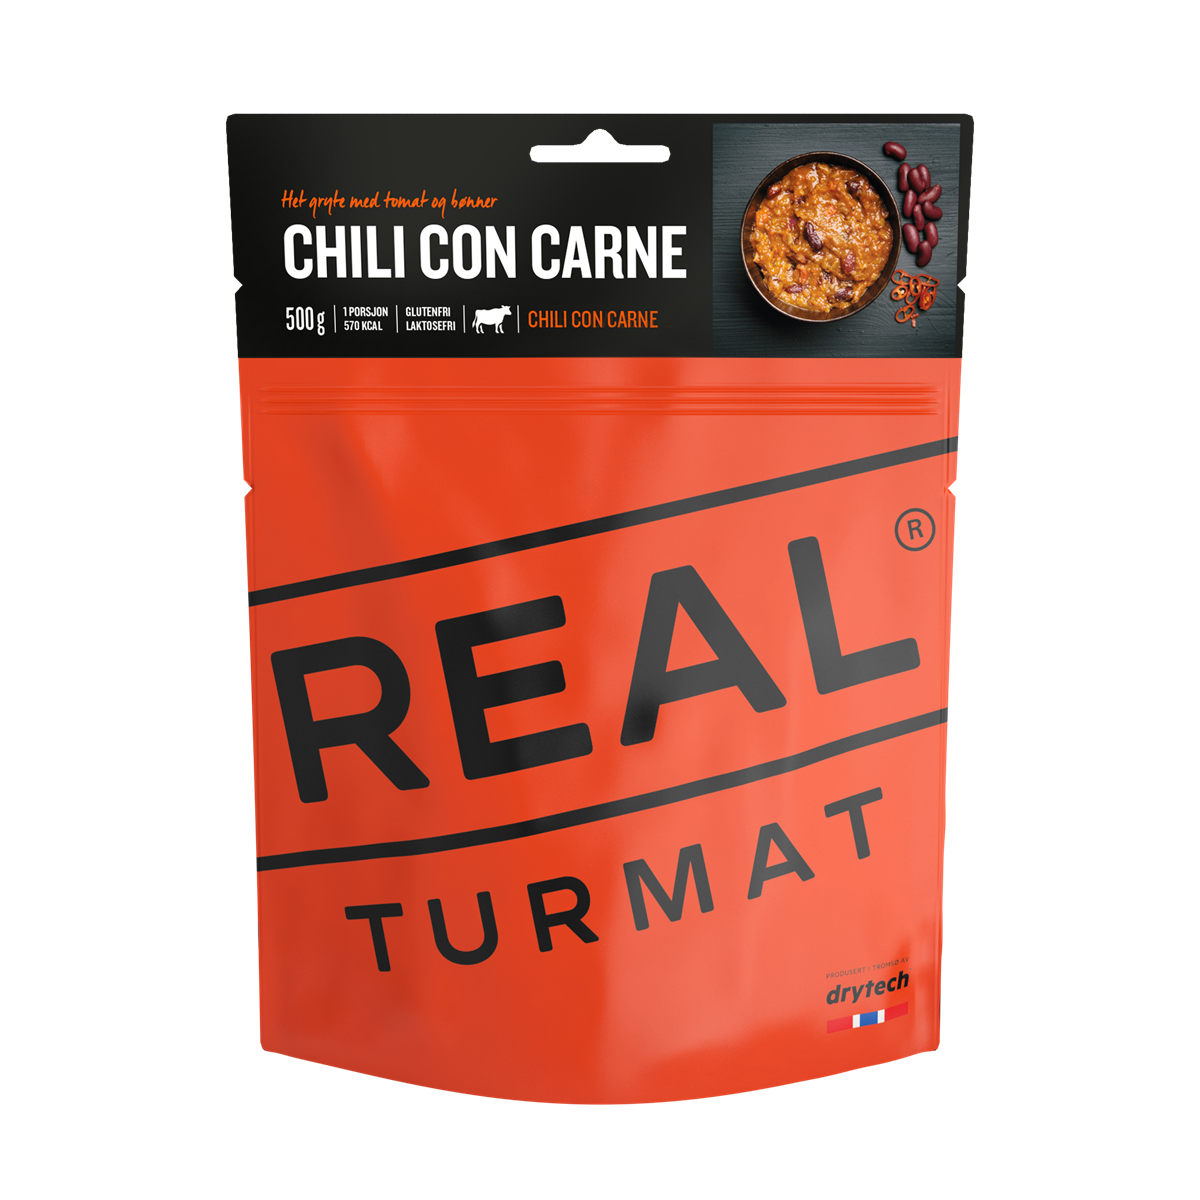 REAL TURMAT Chili Con Carne 500 gr